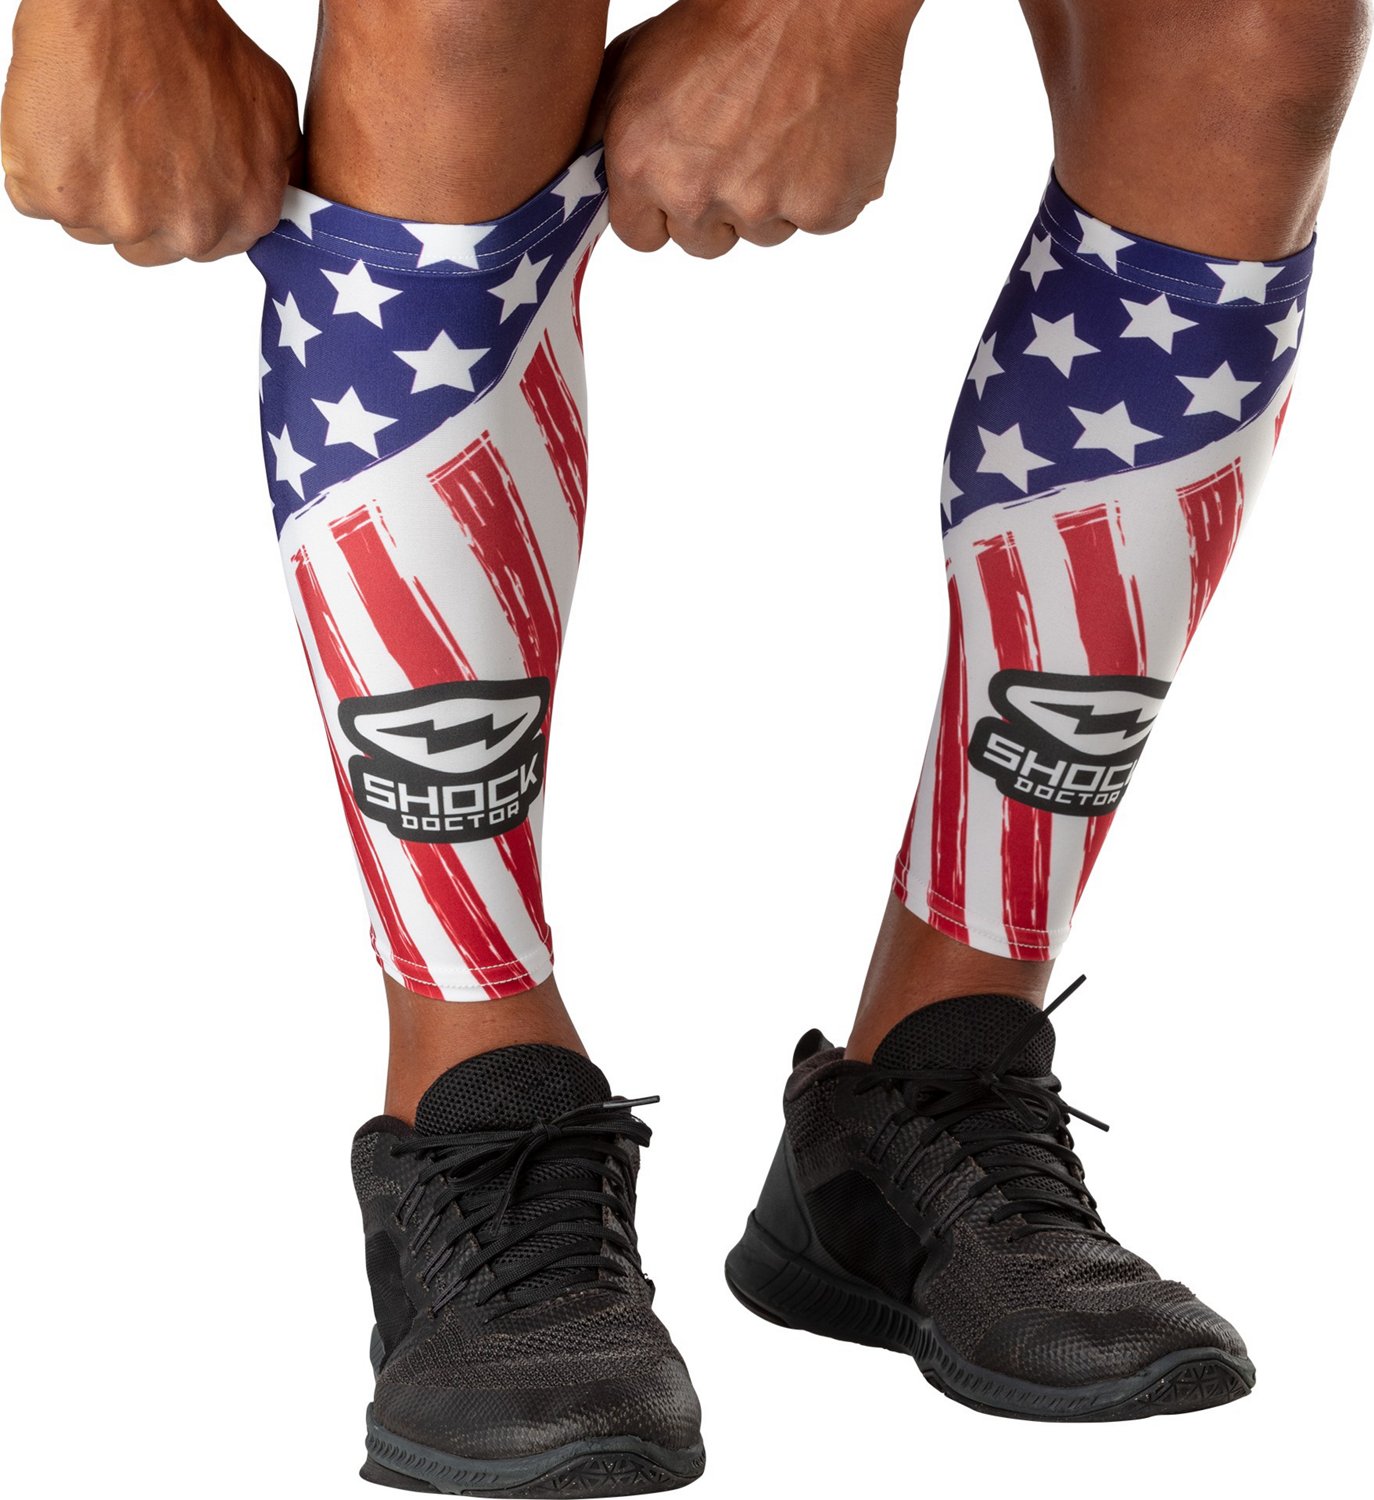 USA Flag Stars and Stripes - Showtime Fabrics